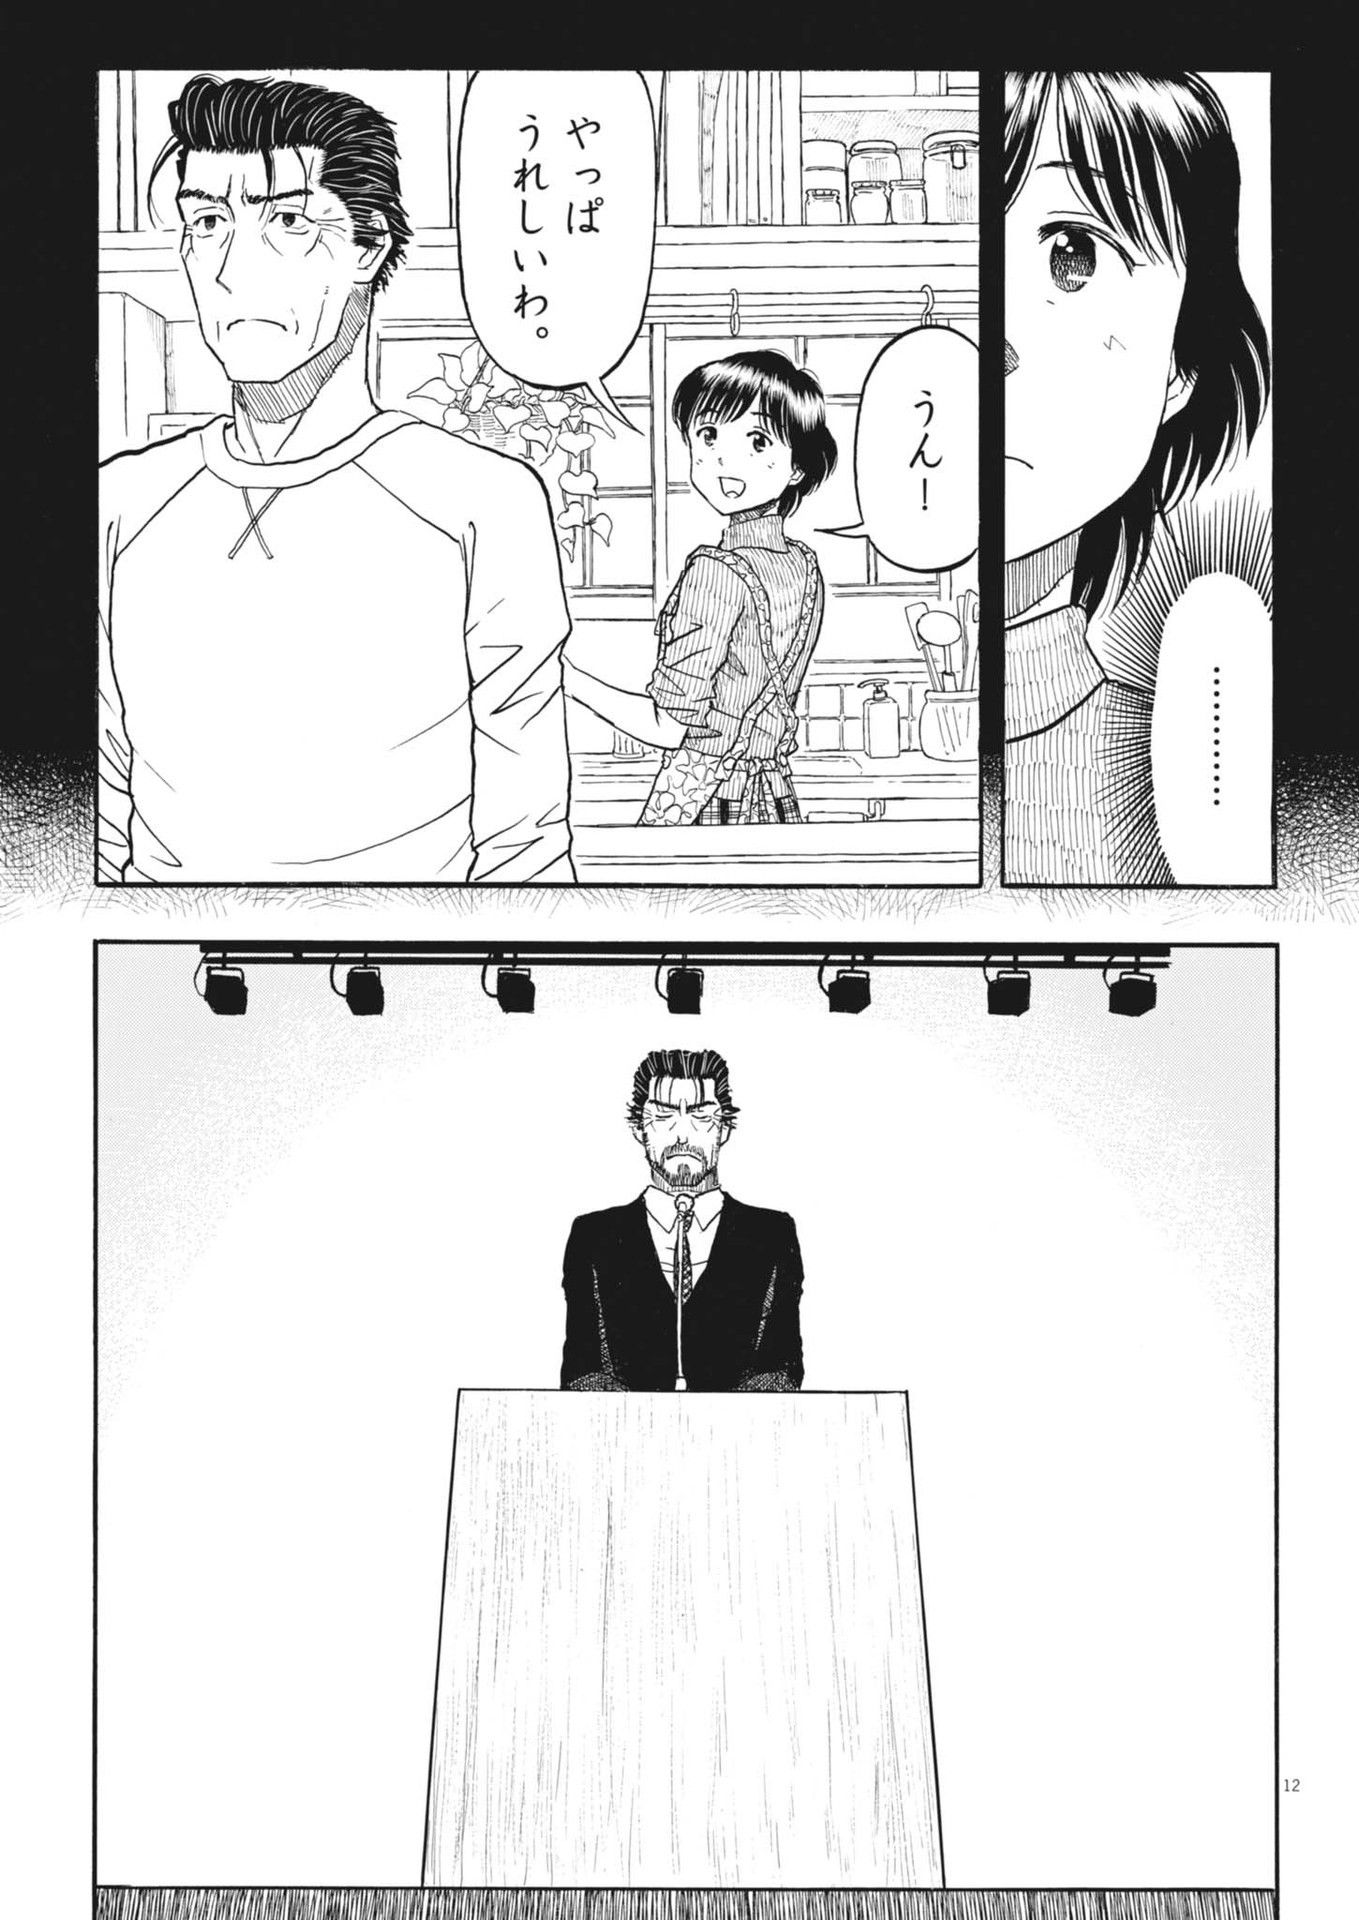 Komegura Fuufu no Recipe-chou - Chapter 40 - Page 12